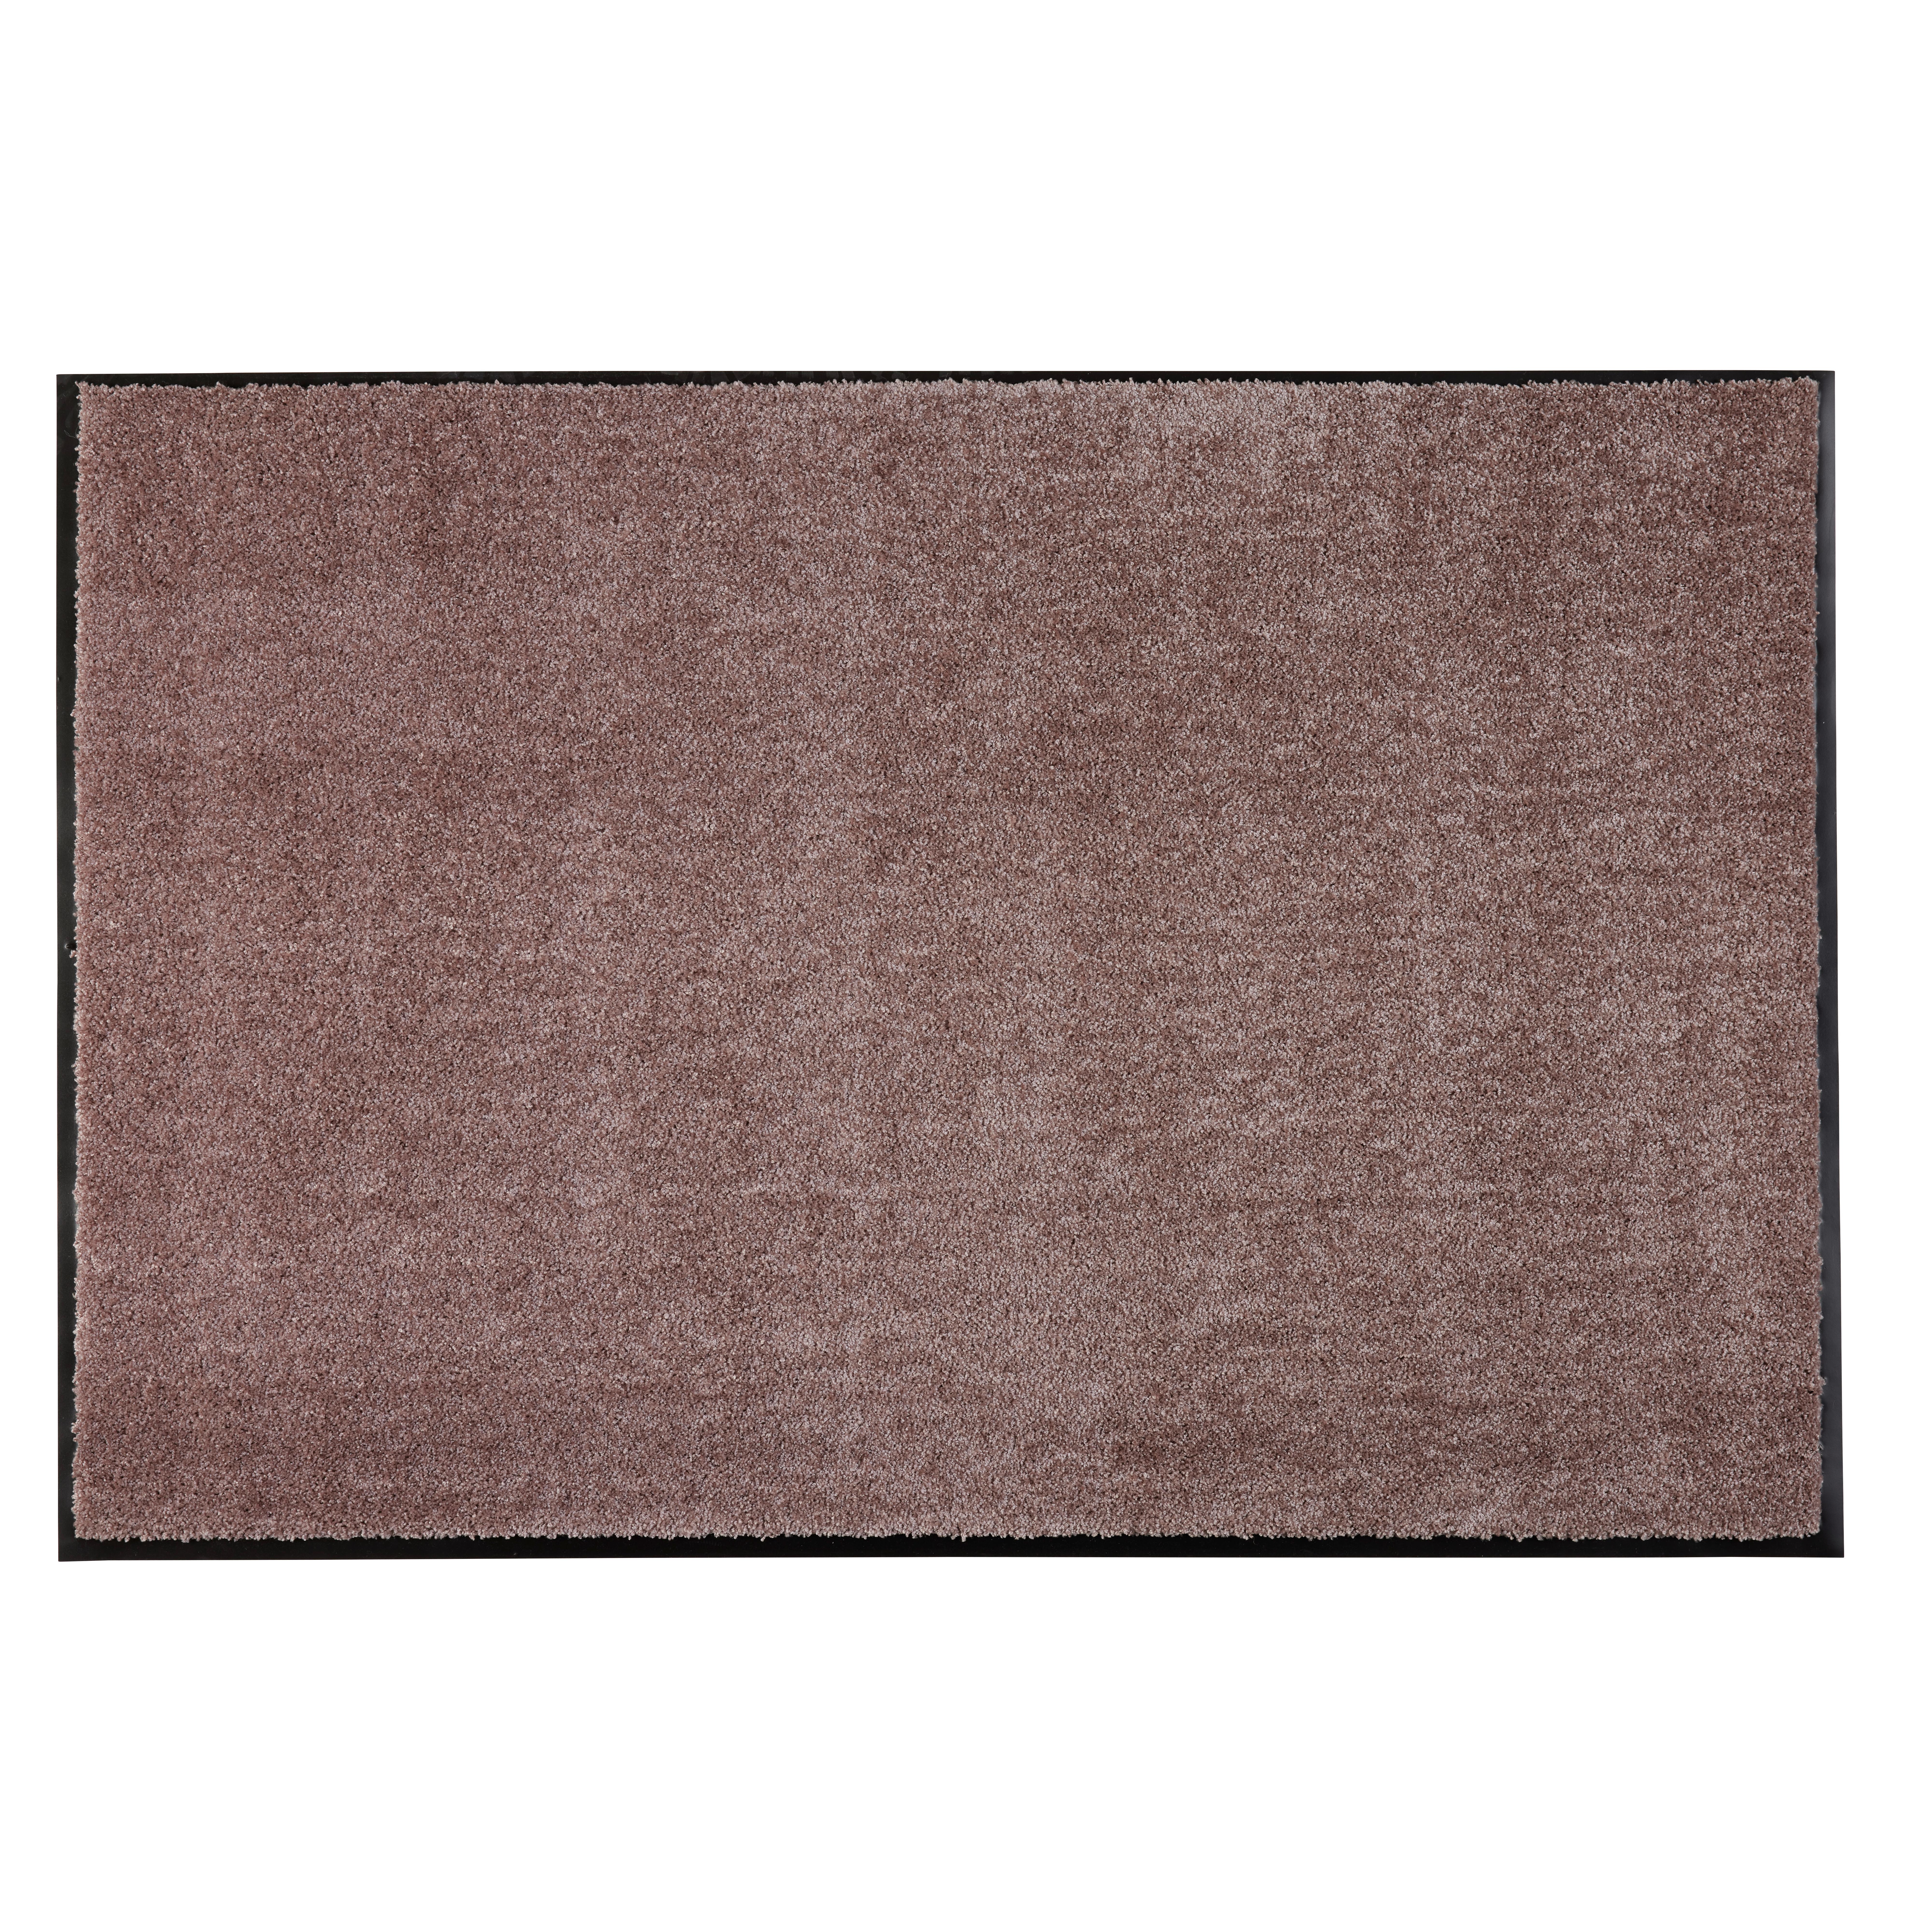 Fußmatte Fortuna 3 in Rosa ca. 80x120cm - Rosa, MODERN, Textil (80/120cm) - Modern Living